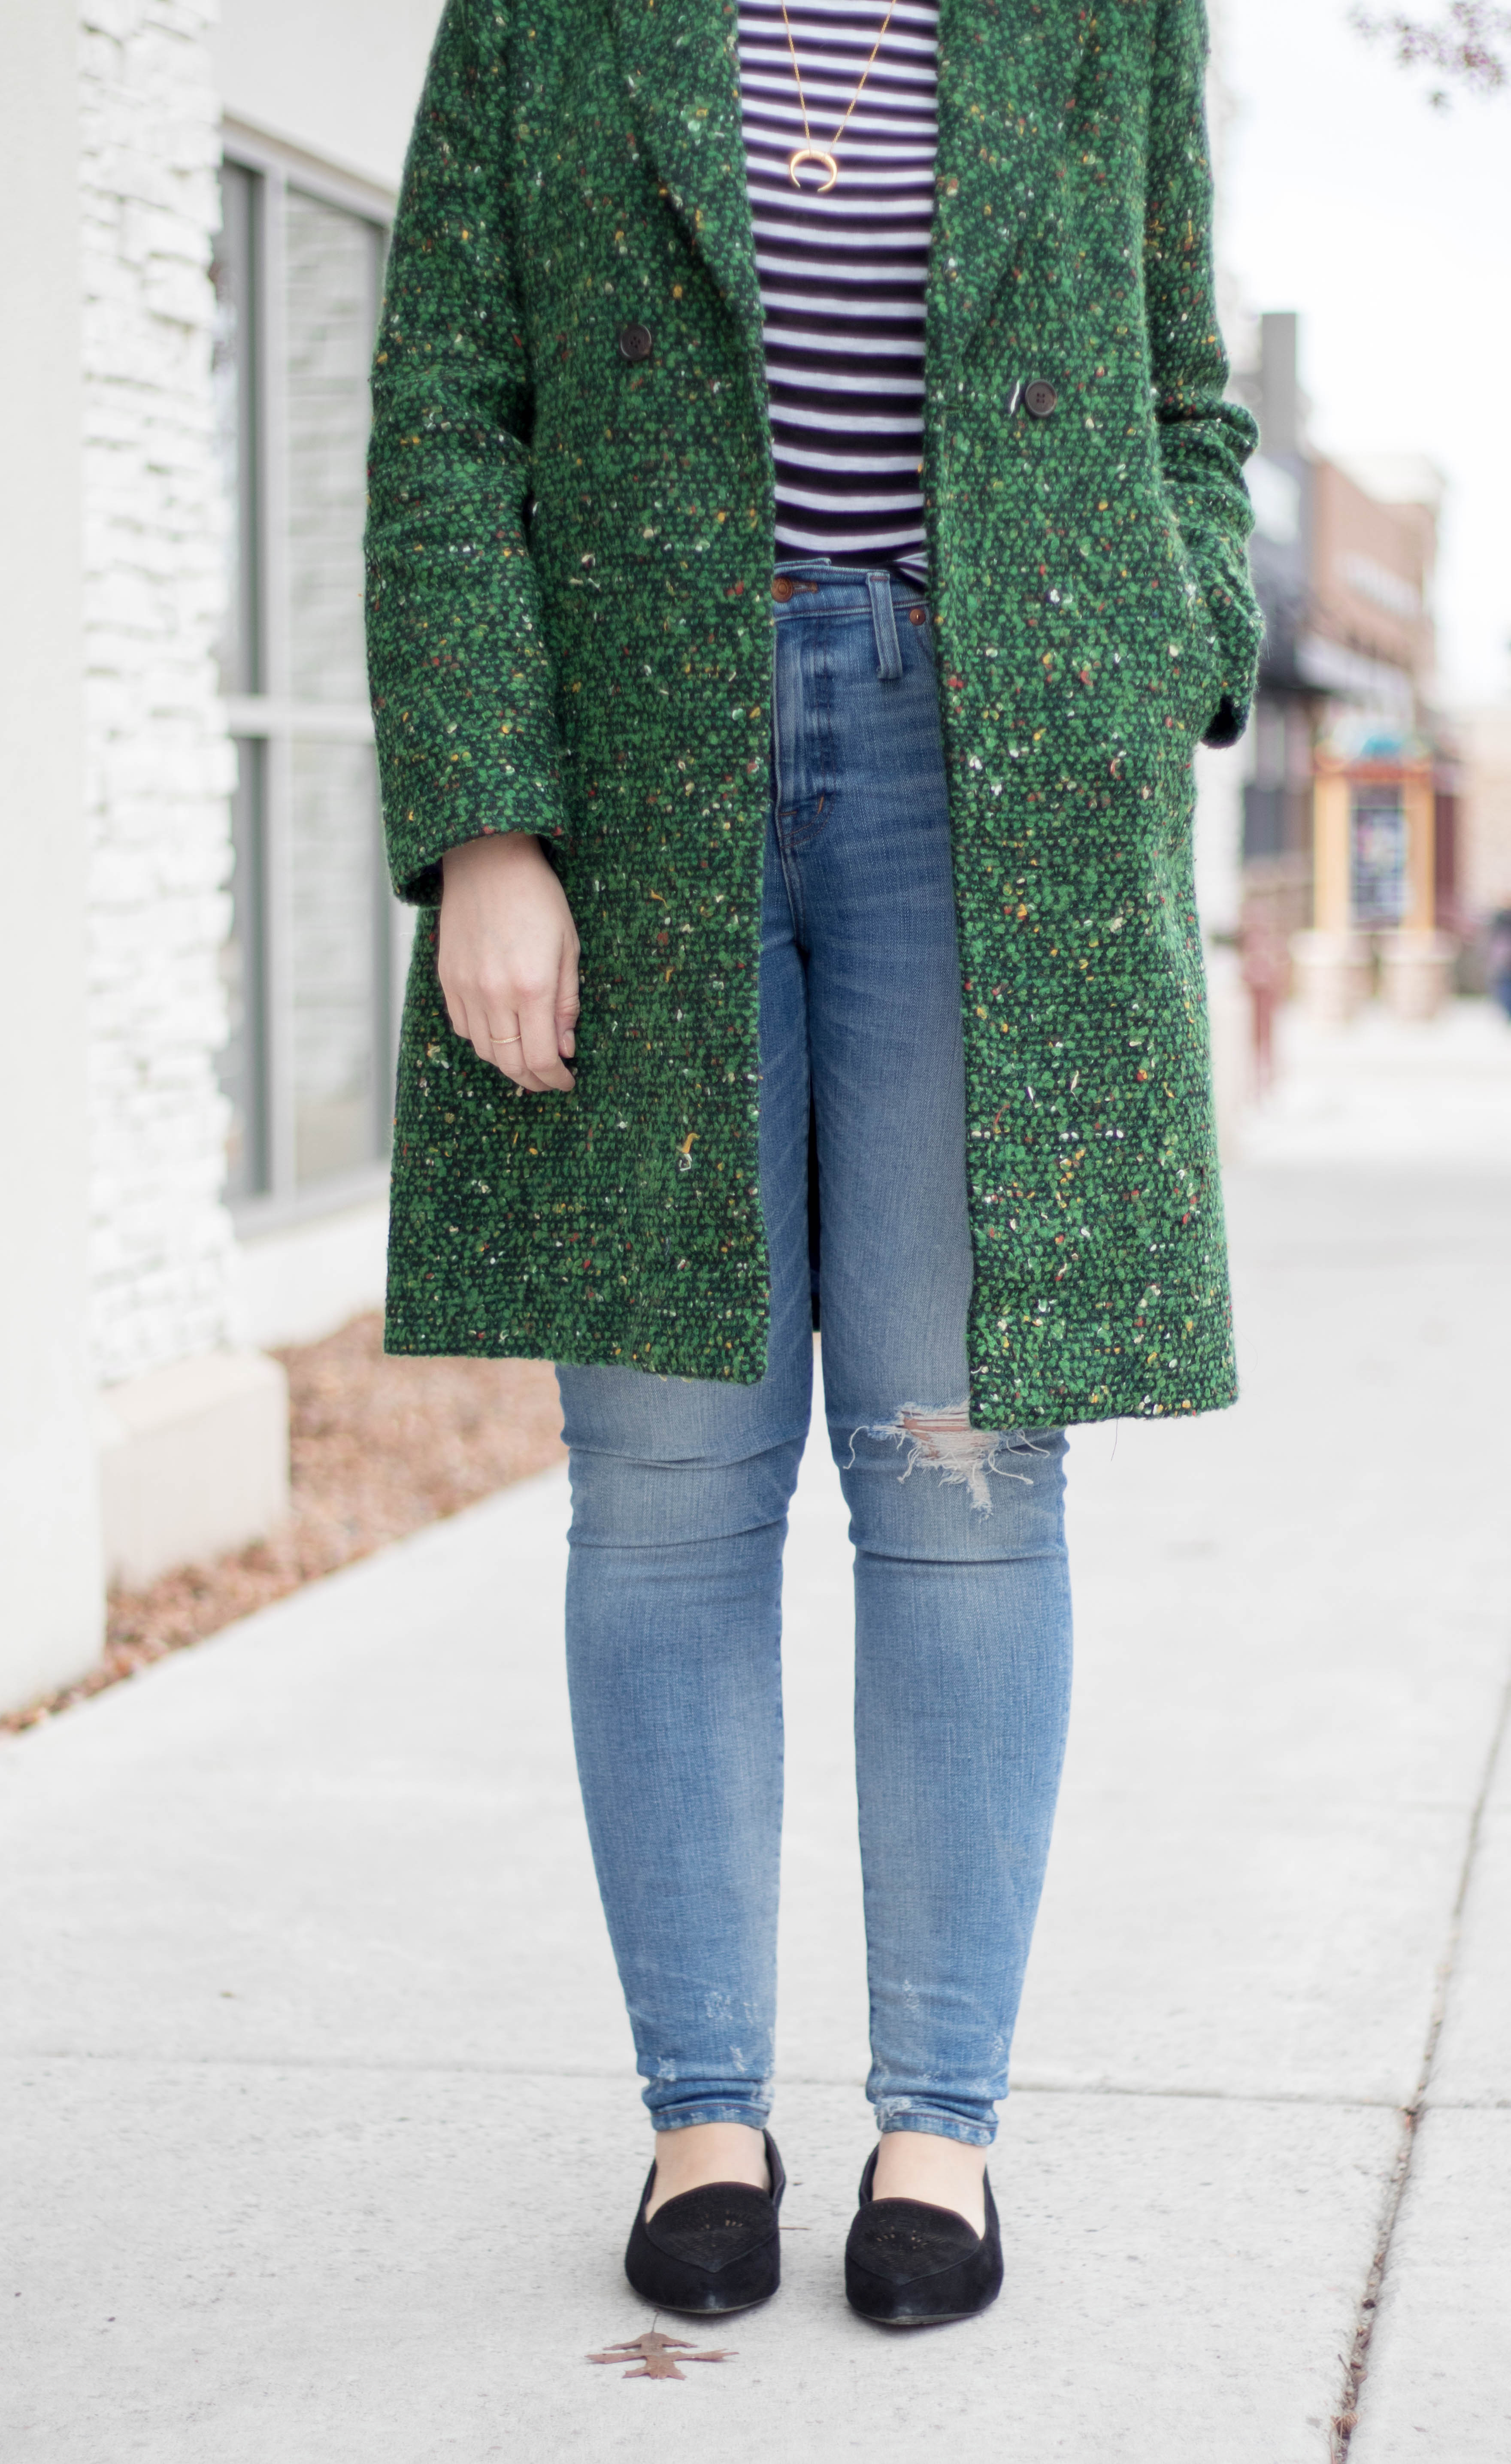 madewell skinny jeans jcrew Daphne coat #madewell #everydaymadewell #jcrew #winteroutfit